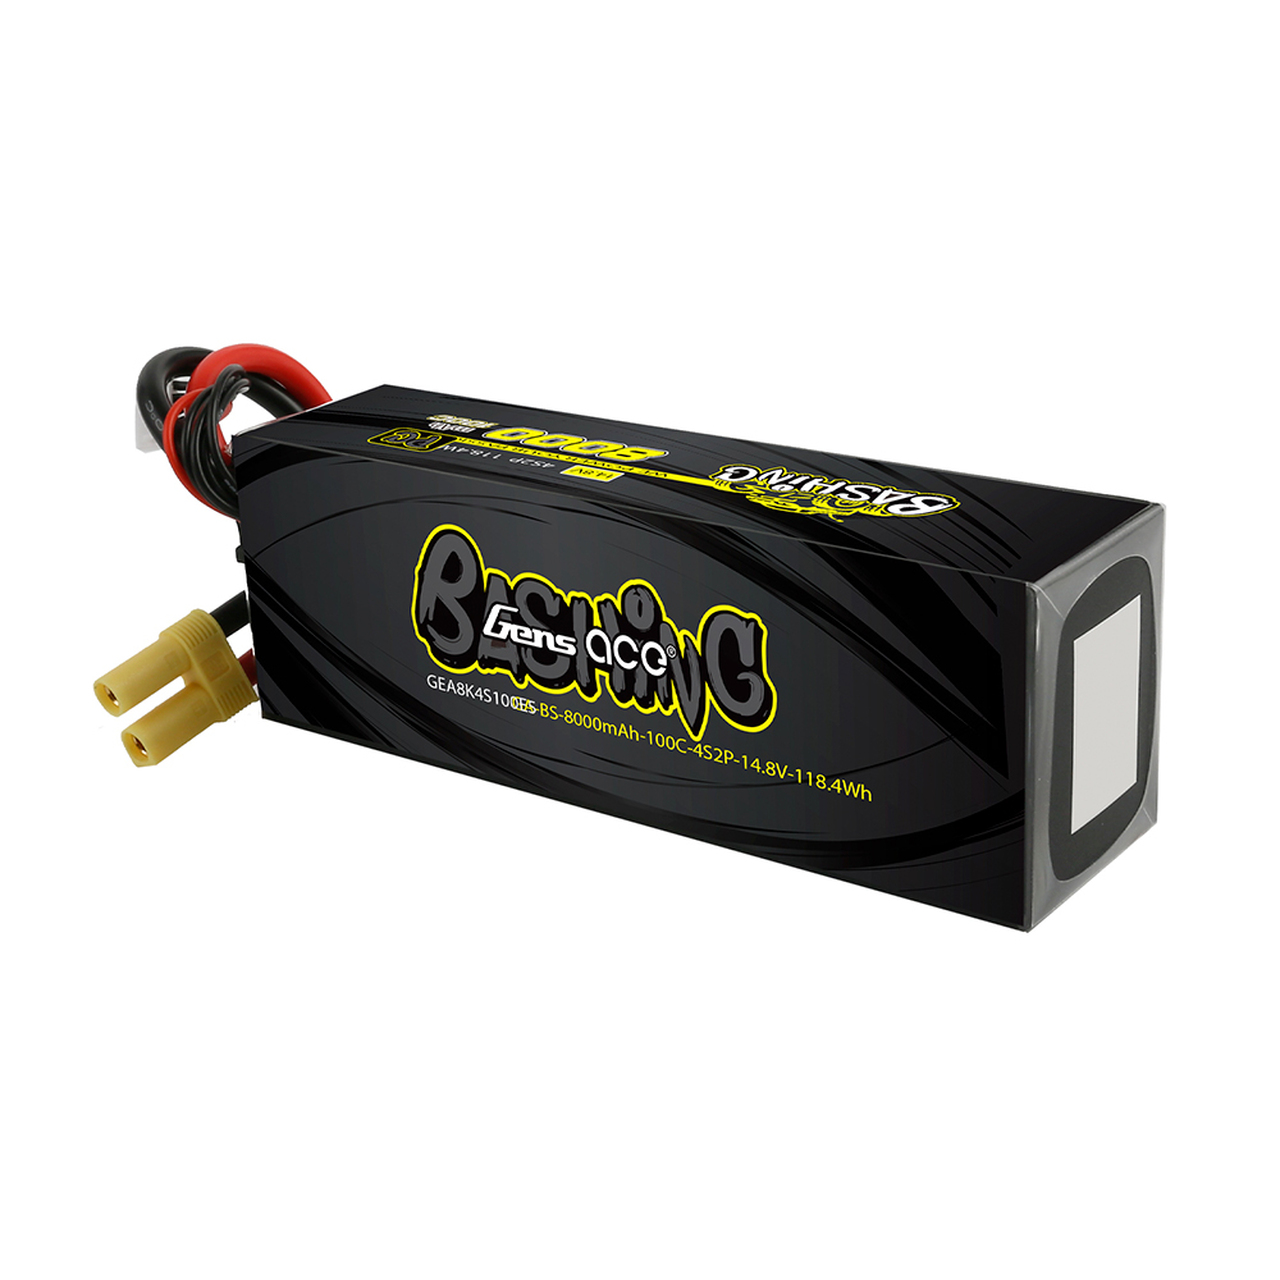 Gens ace Bashing Pro 14.8v 100C 4S 8000mah Lipo Battery Pack with EC5 Plug for Arrma